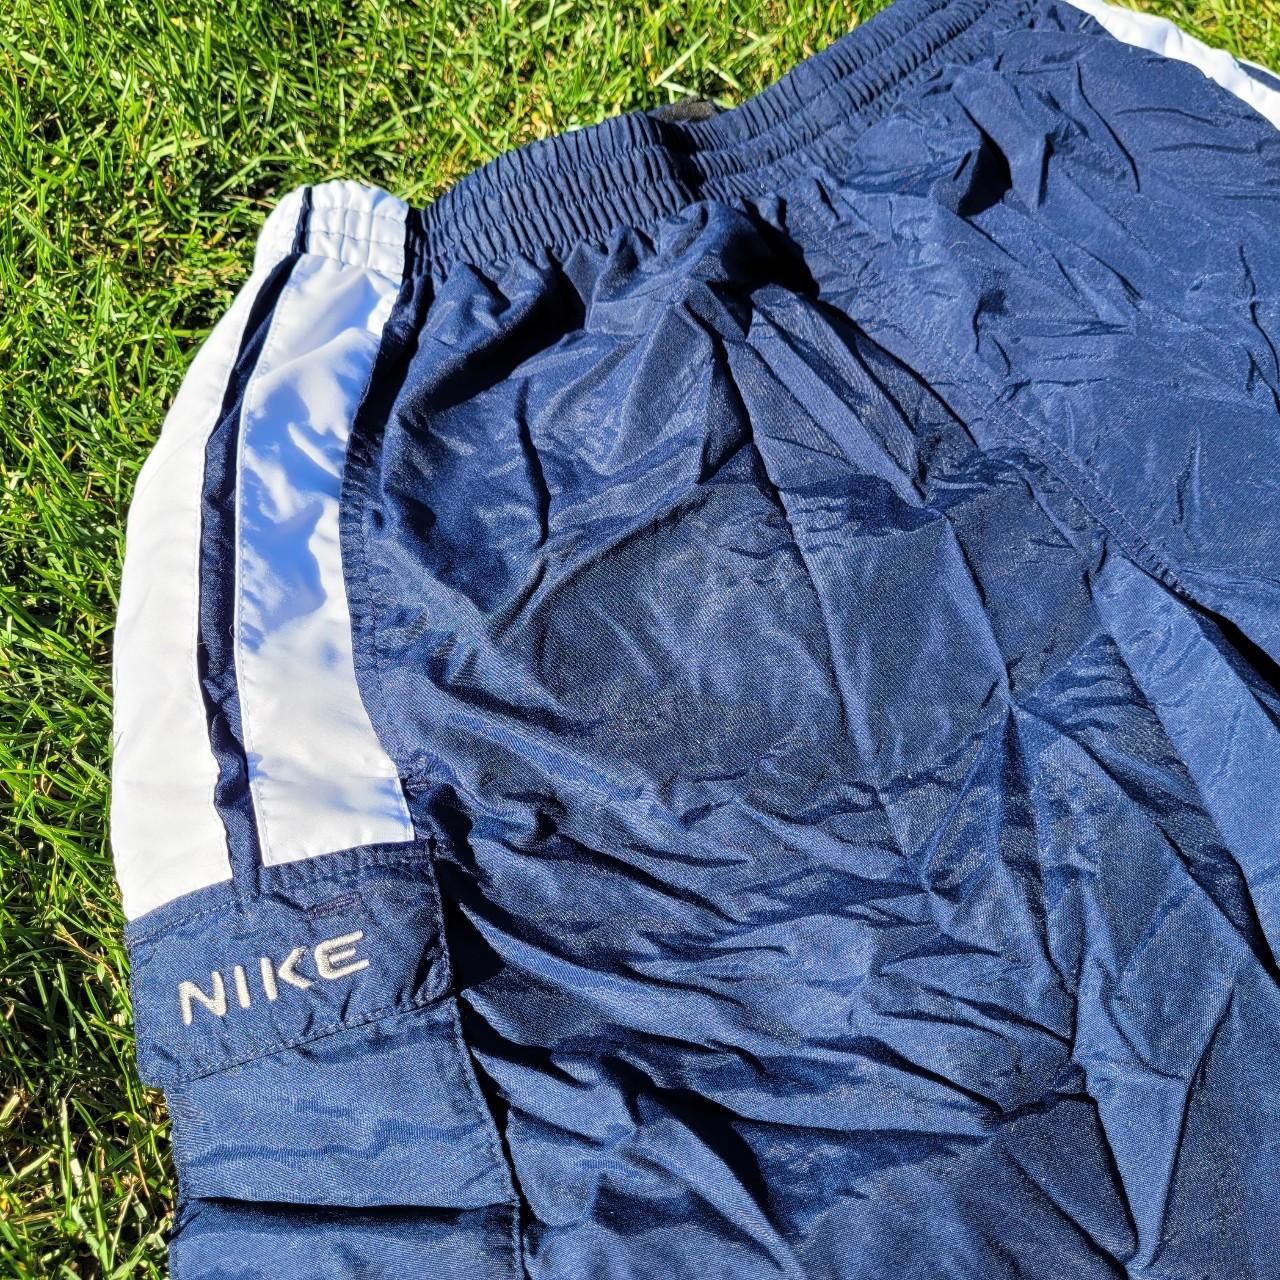 Nike Men's Navy and White Swim-briefs-shorts (2)